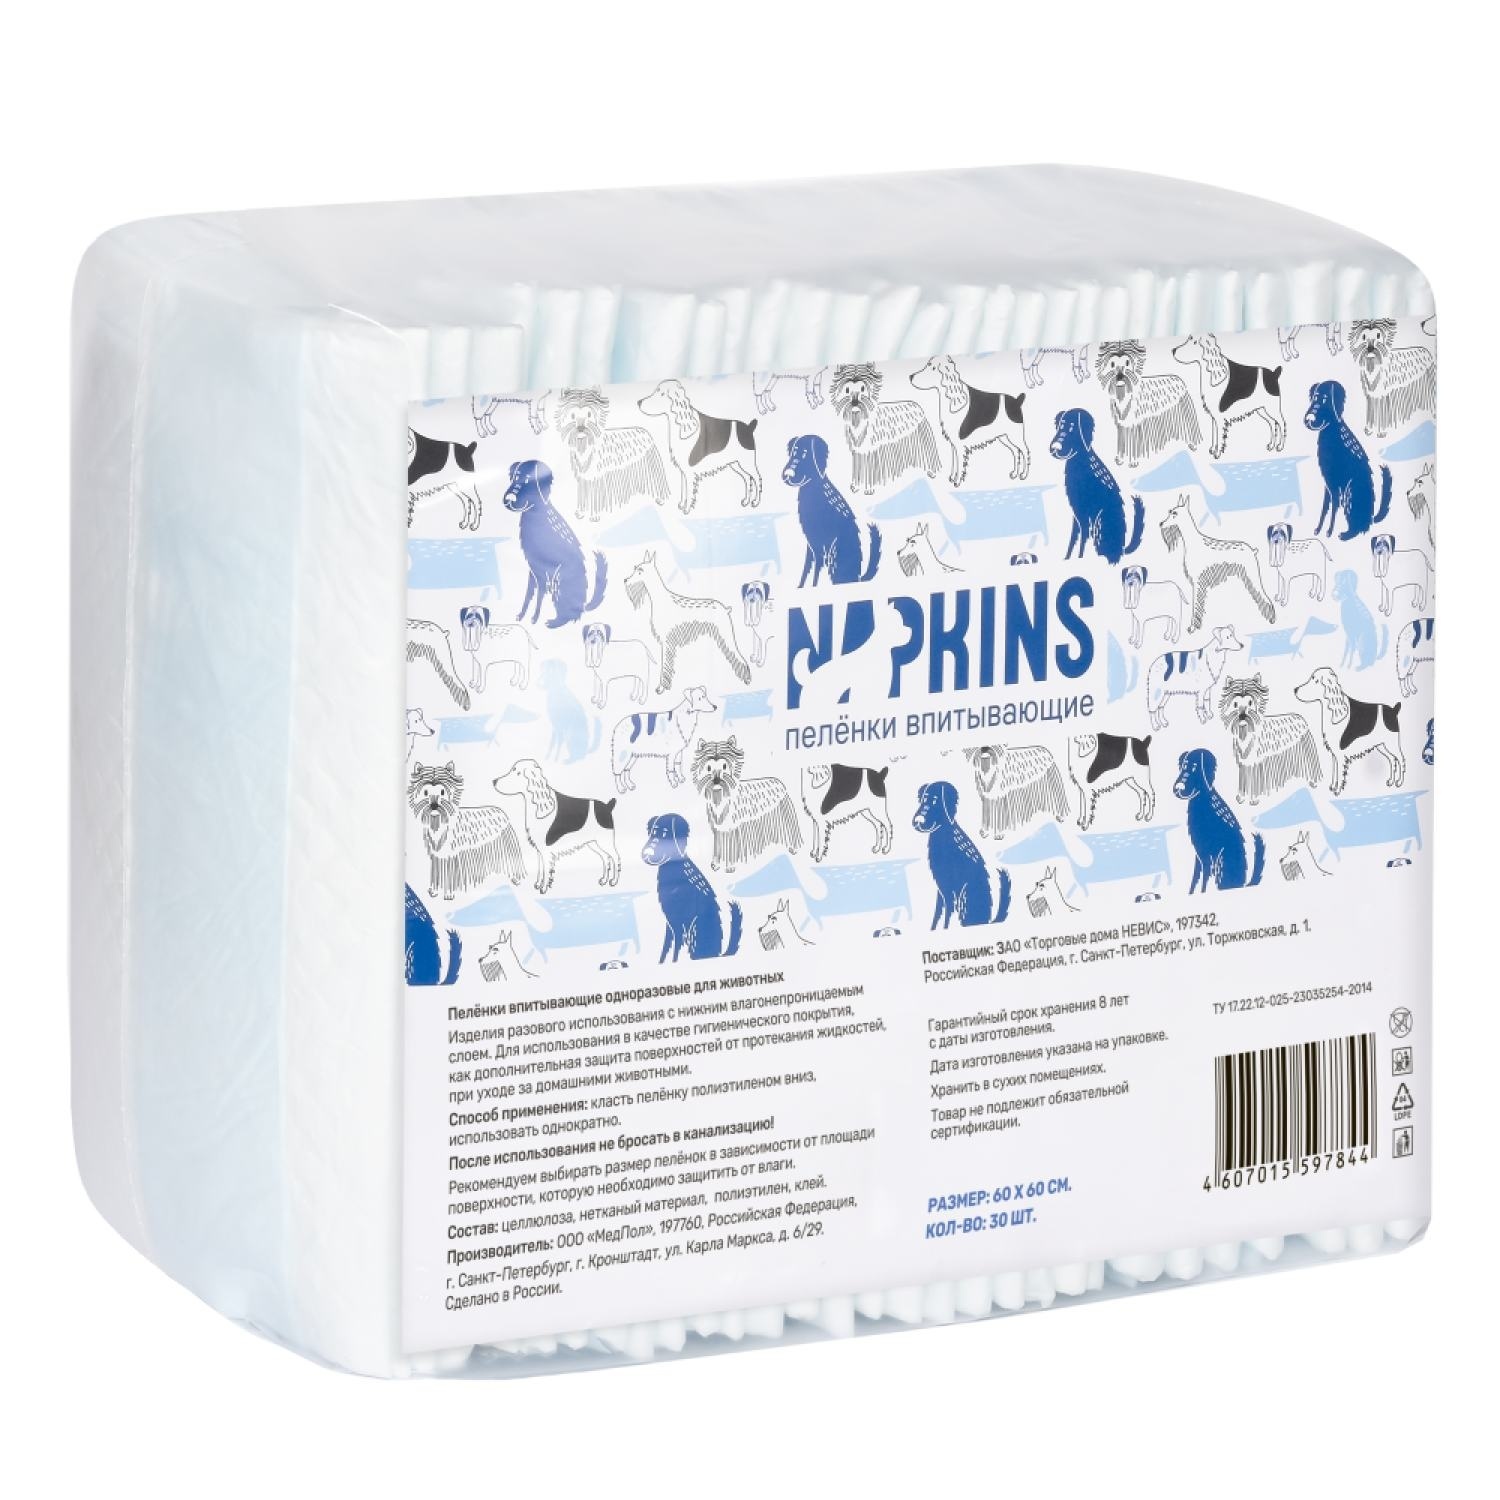 NAPKINS NAPKINS впитывающие пелёнки с целлюлозой для собак 60х60 (300 г) napkins napkins гелевые пелёнки для собак 60х60 300 г